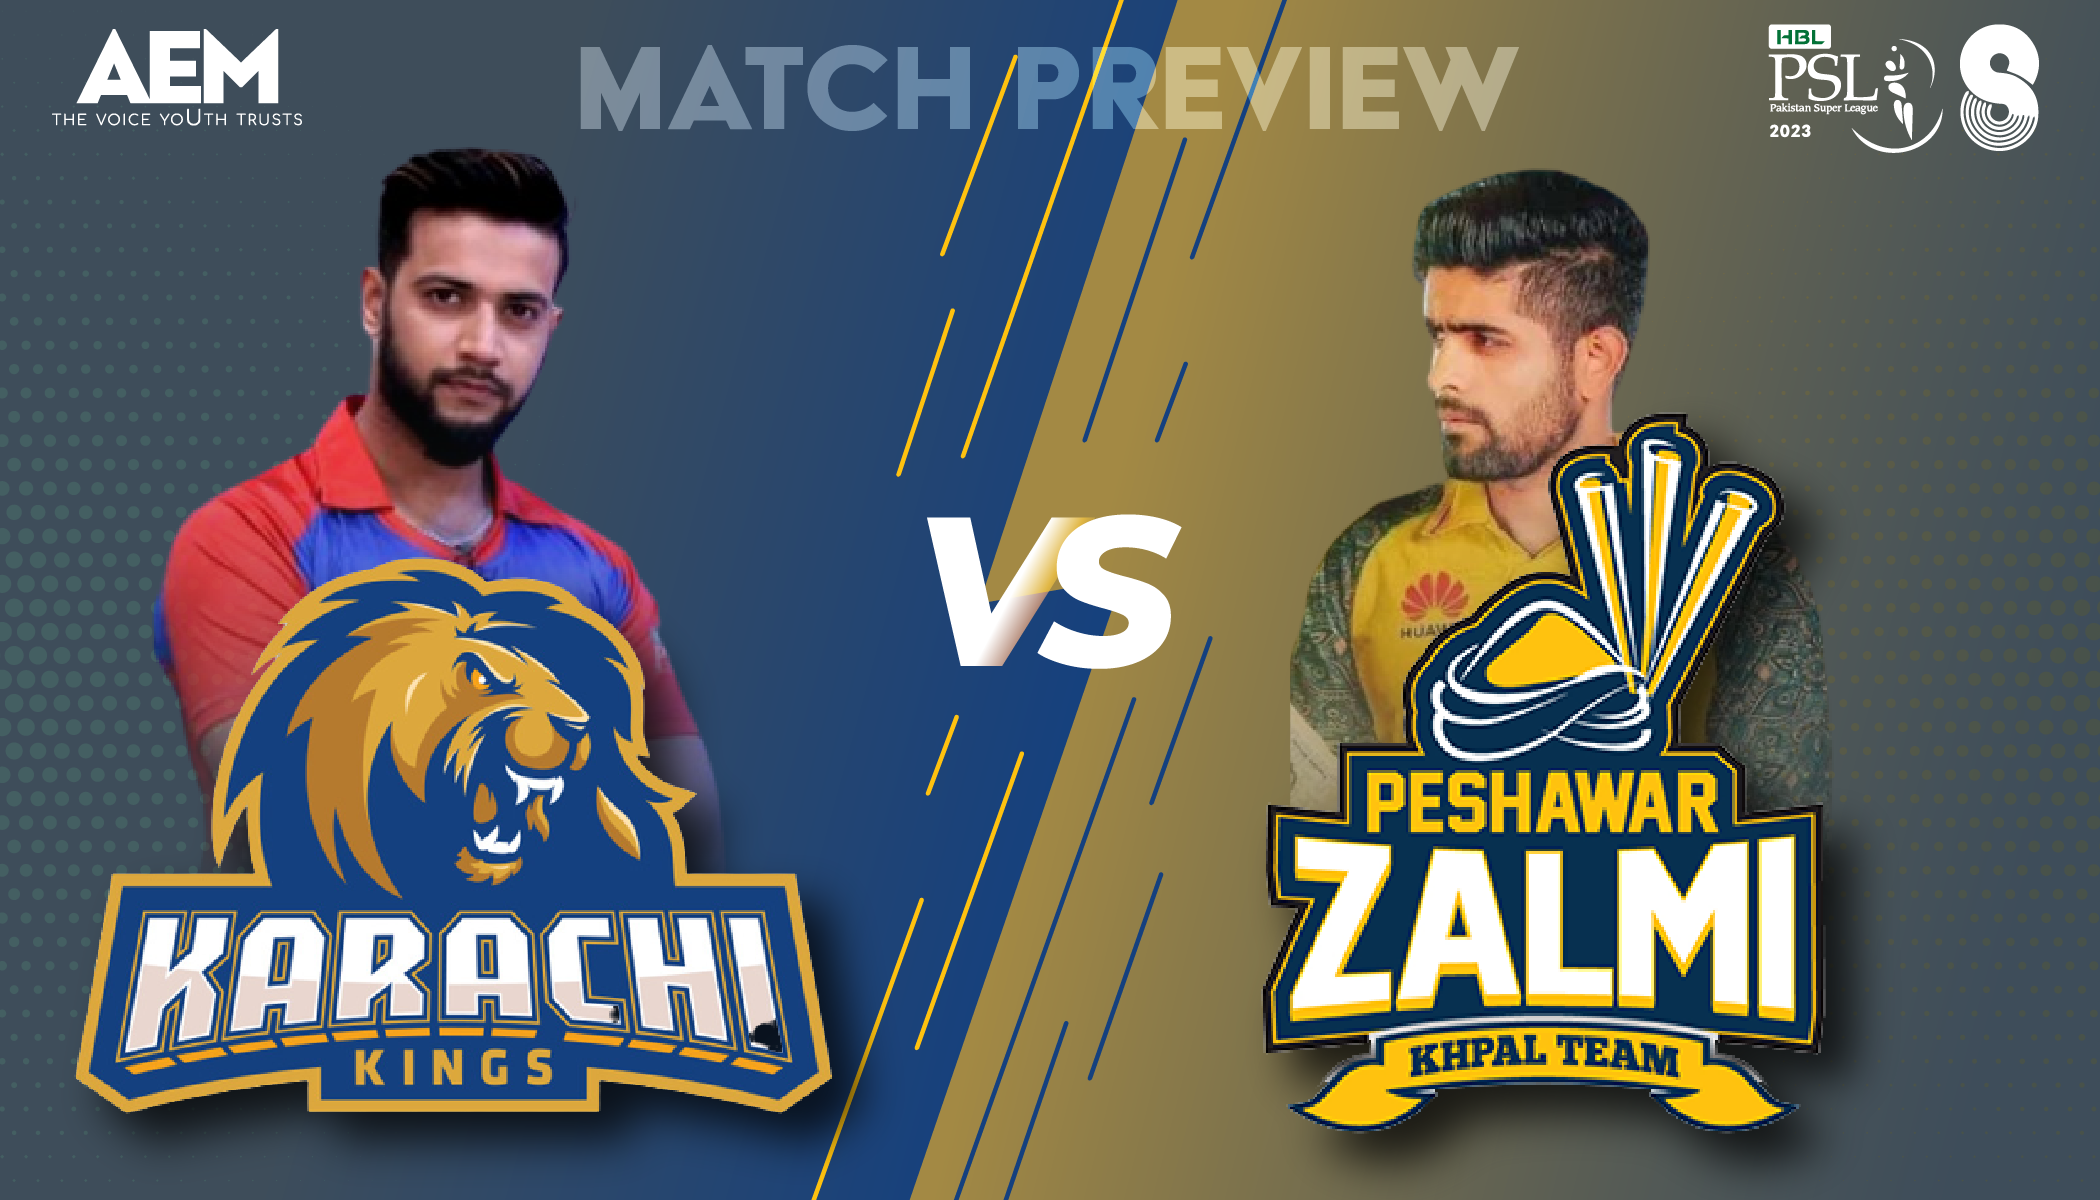 Match Preview of Karachi Kings VS Peshawar Zalmi